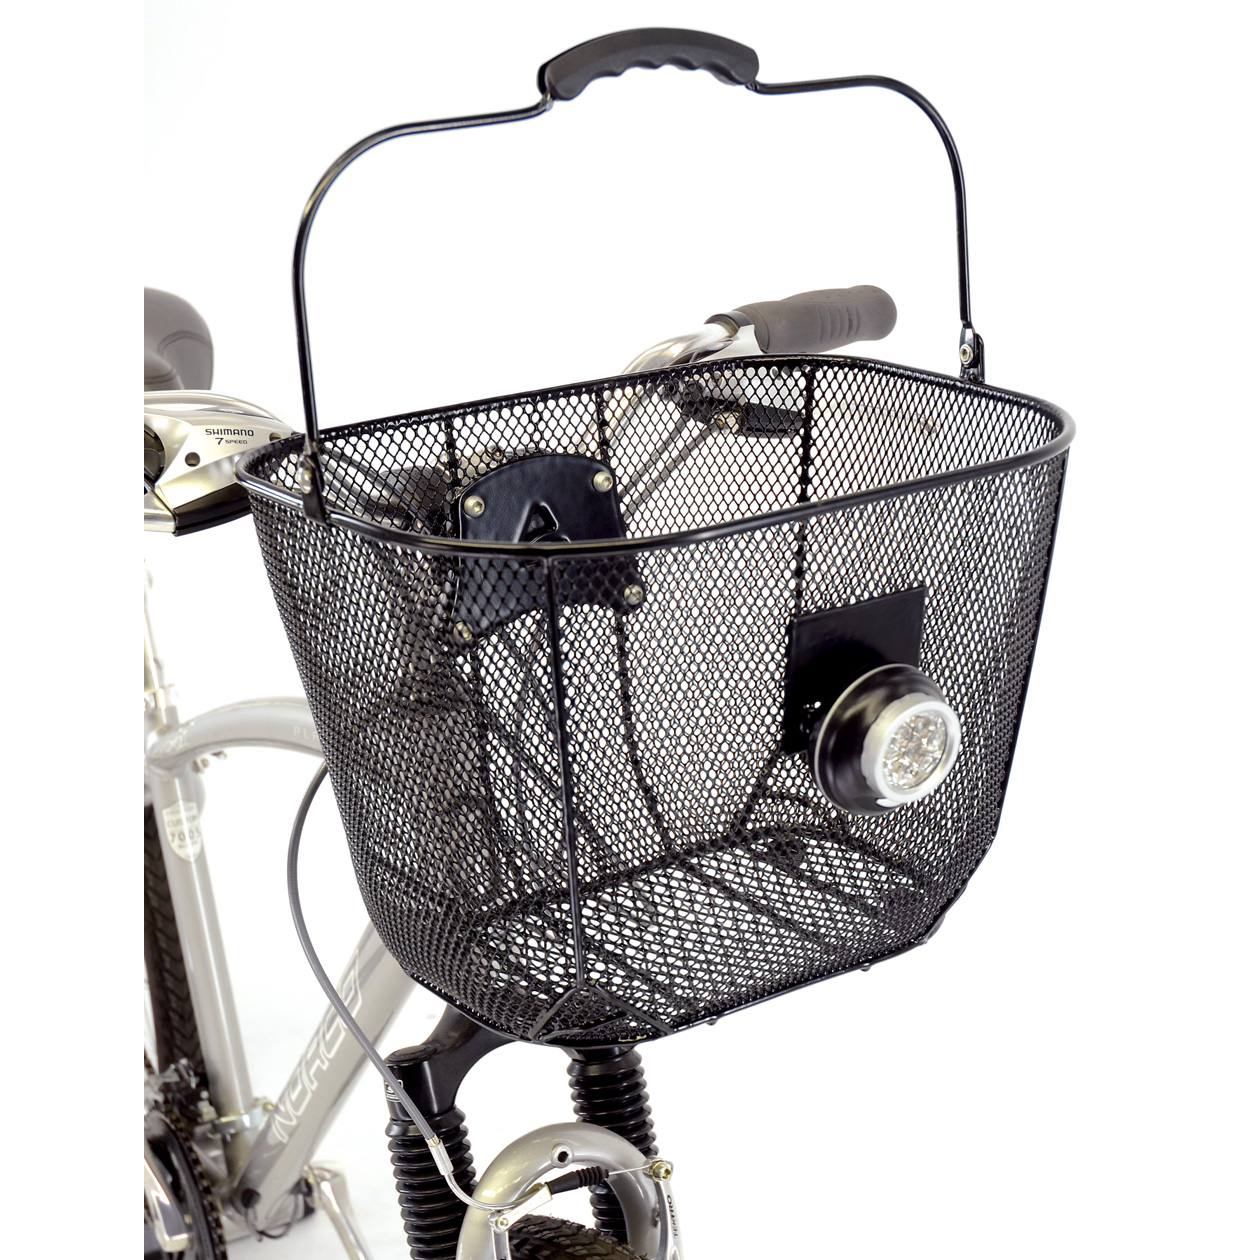 axiom bicycle basket